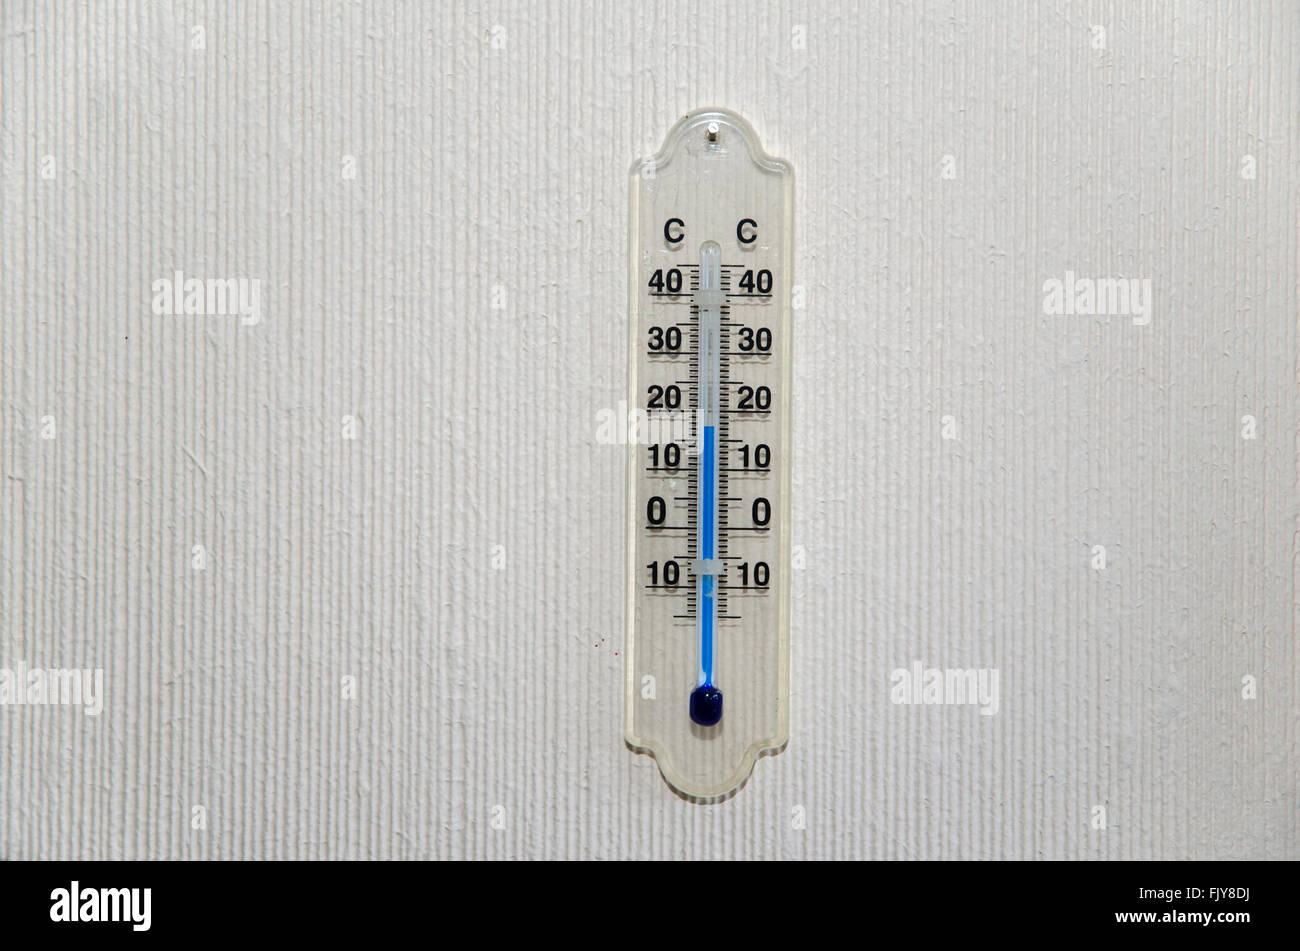 https://c8.alamy.com/comp/FJY8DJ/single-indoors-celcius-thermometer-at-a-bright-wall-FJY8DJ.jpg